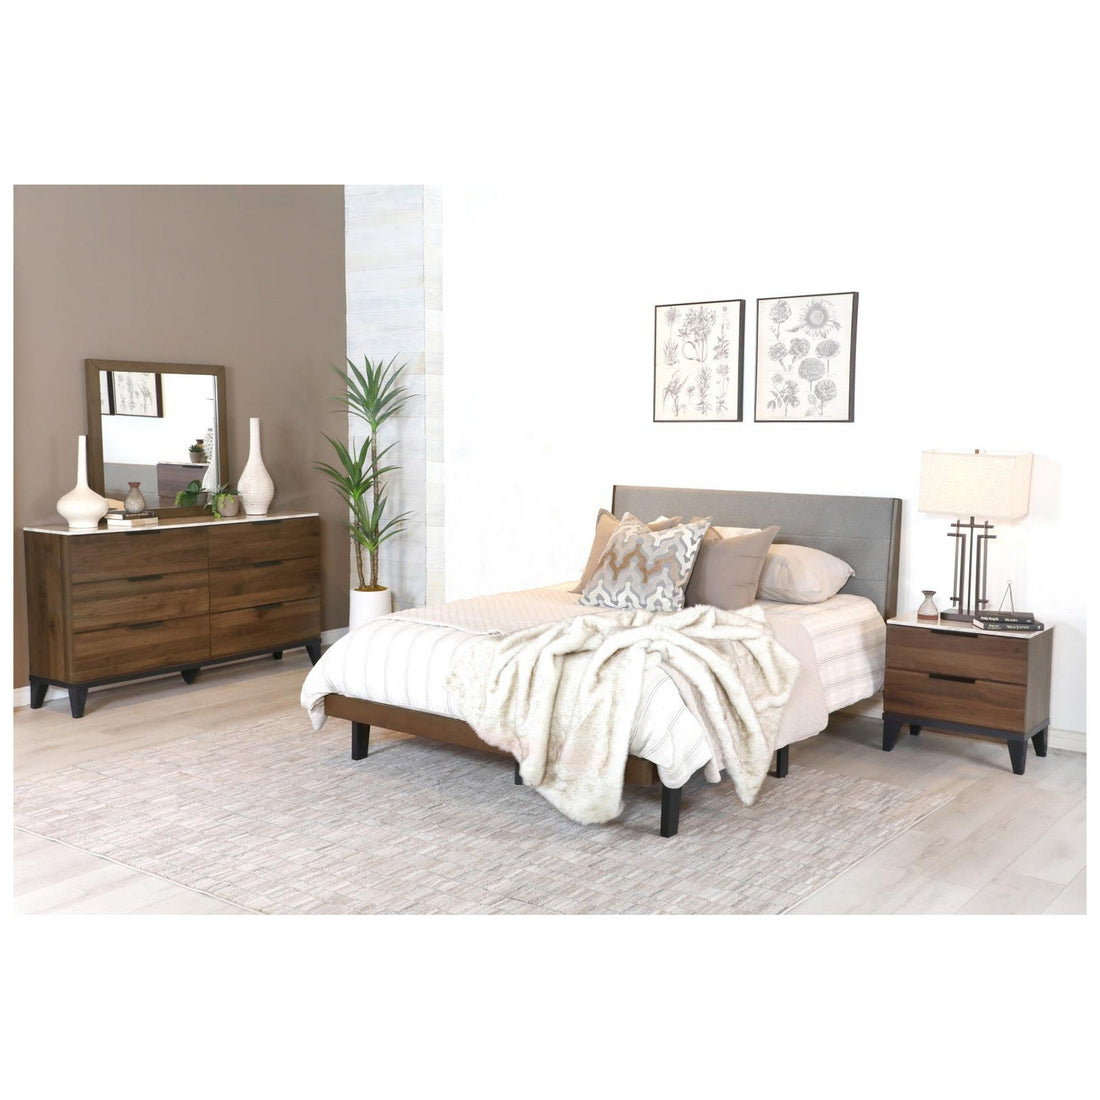 Mays 4-piece Upholstered Eastern King Bedroom Set Walnut Brown and Grey 215961KE-S4